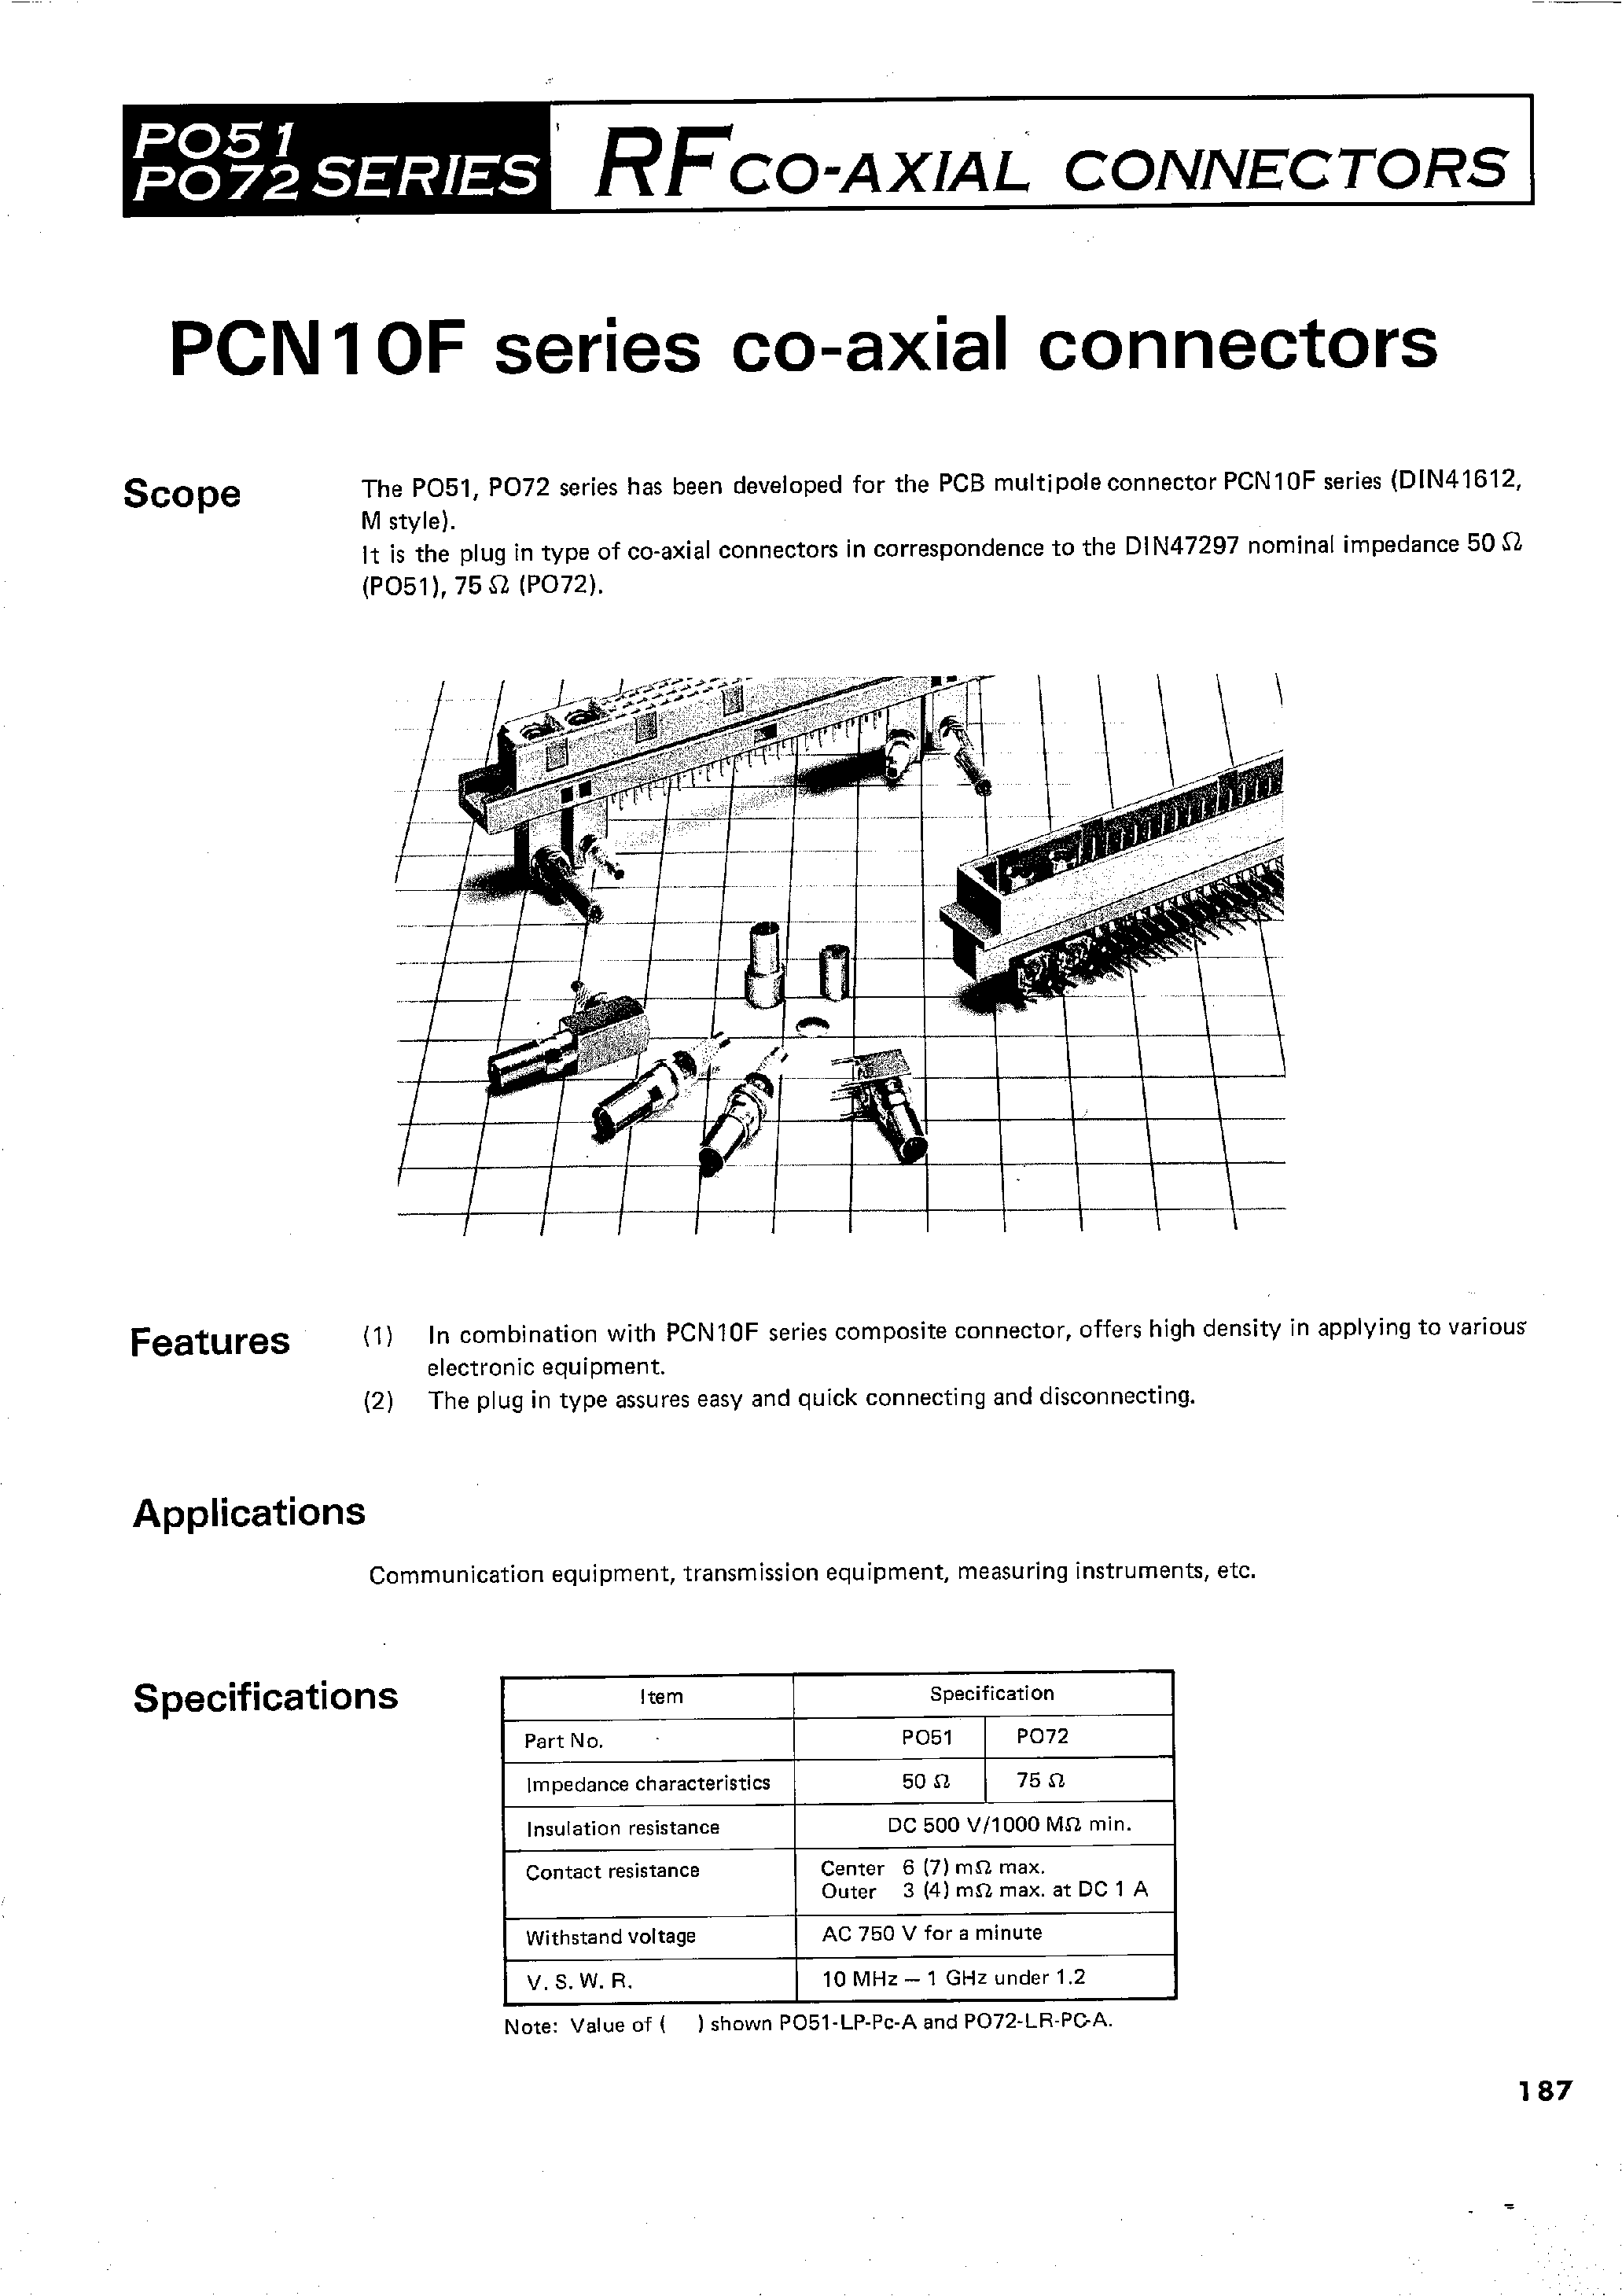 Datasheet PO72-P-1.5C-1A - RFCO-AXIAL CONNECTORS page 1